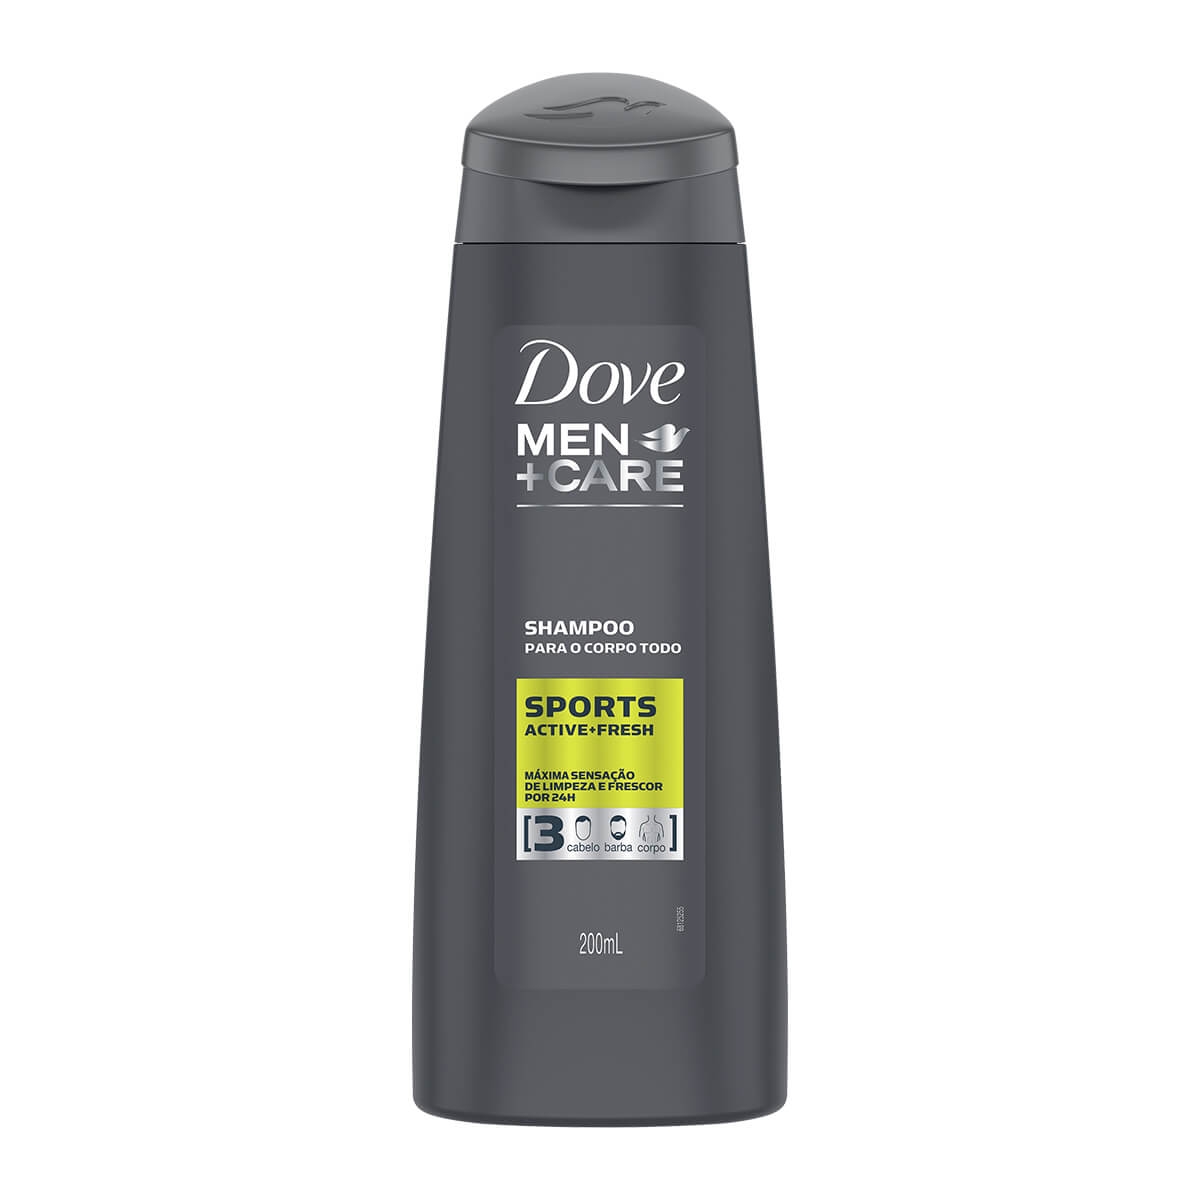 Shampoo Dove Men+Care Sports com 200ml 200ml